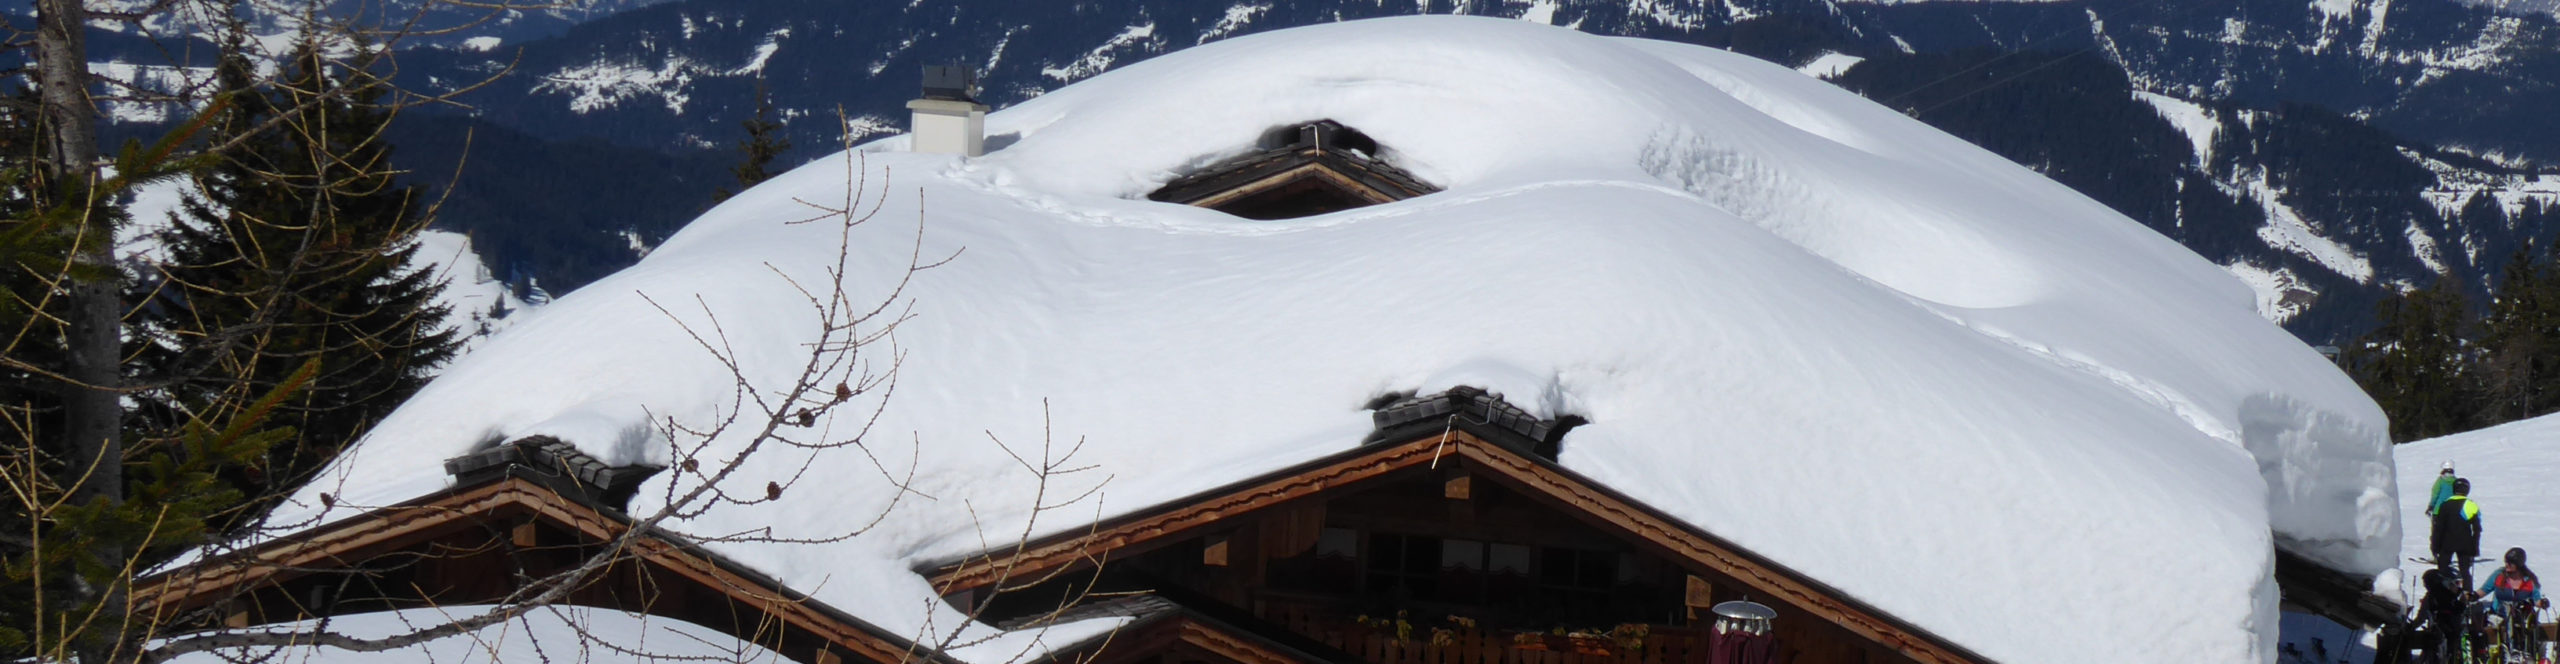 SNOWSPACE FLACHAU – Skiwochenende im tollen 3 Sterne Hotel ab Freitag Nachmittag 